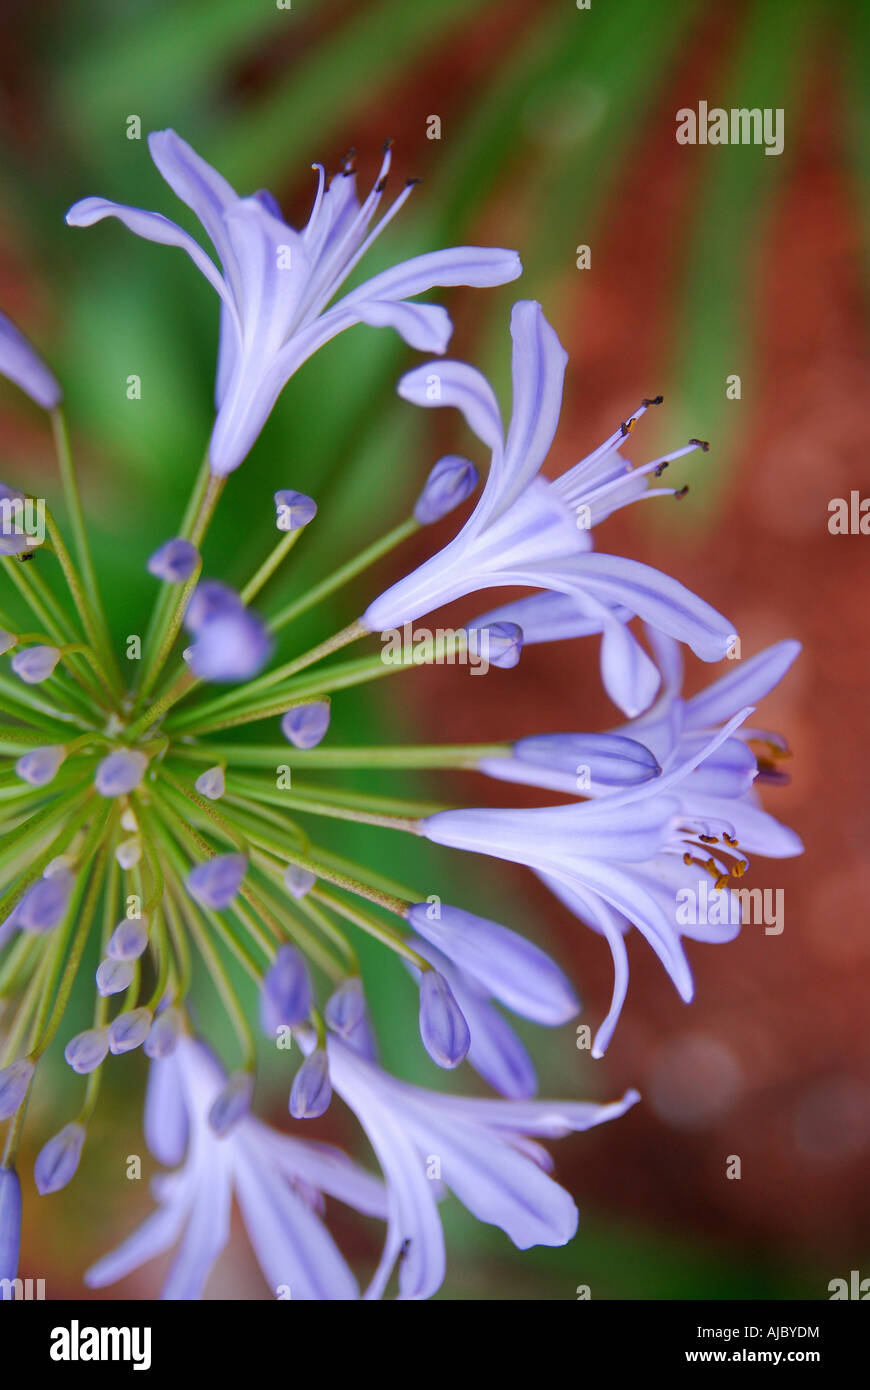 Agapanthus Flowers (Agapanthus praecox) in Bloom Stock Photo